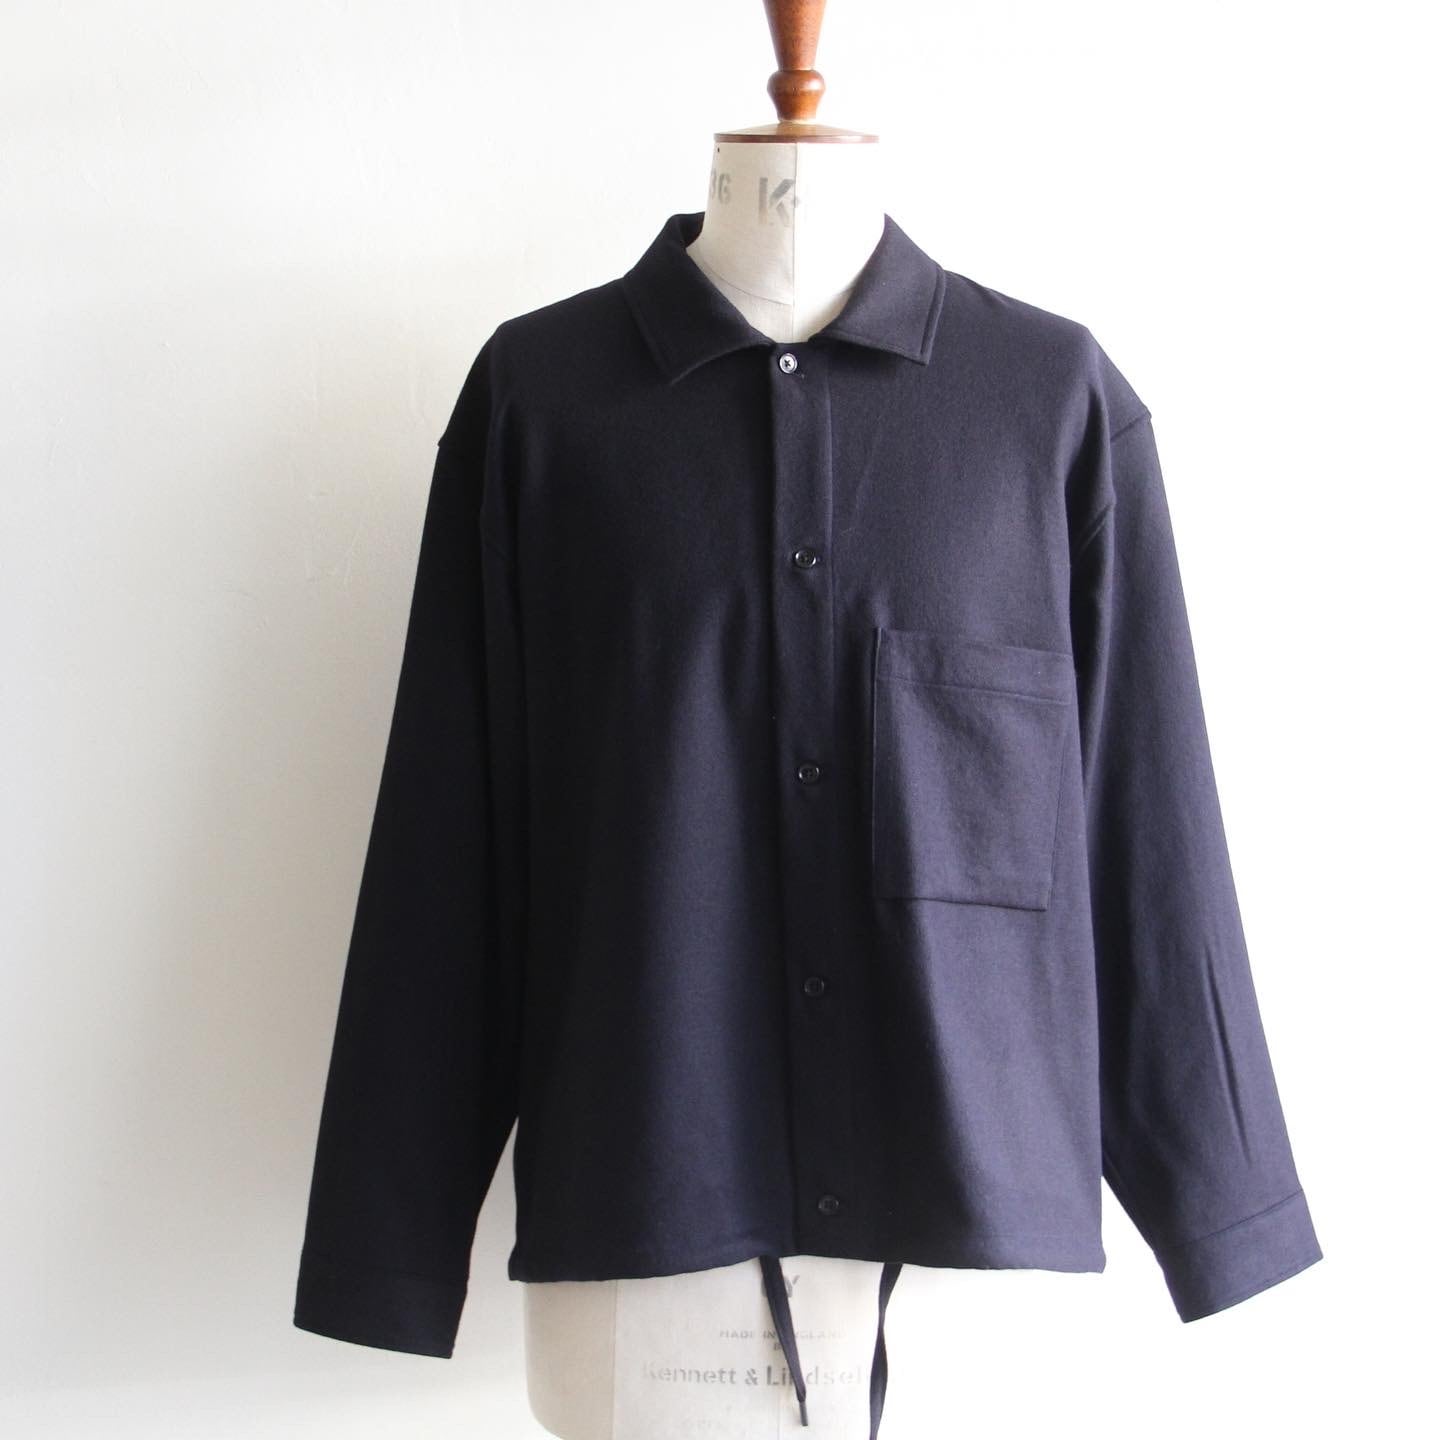 STILL BY HAND【mens】wool coach jacket